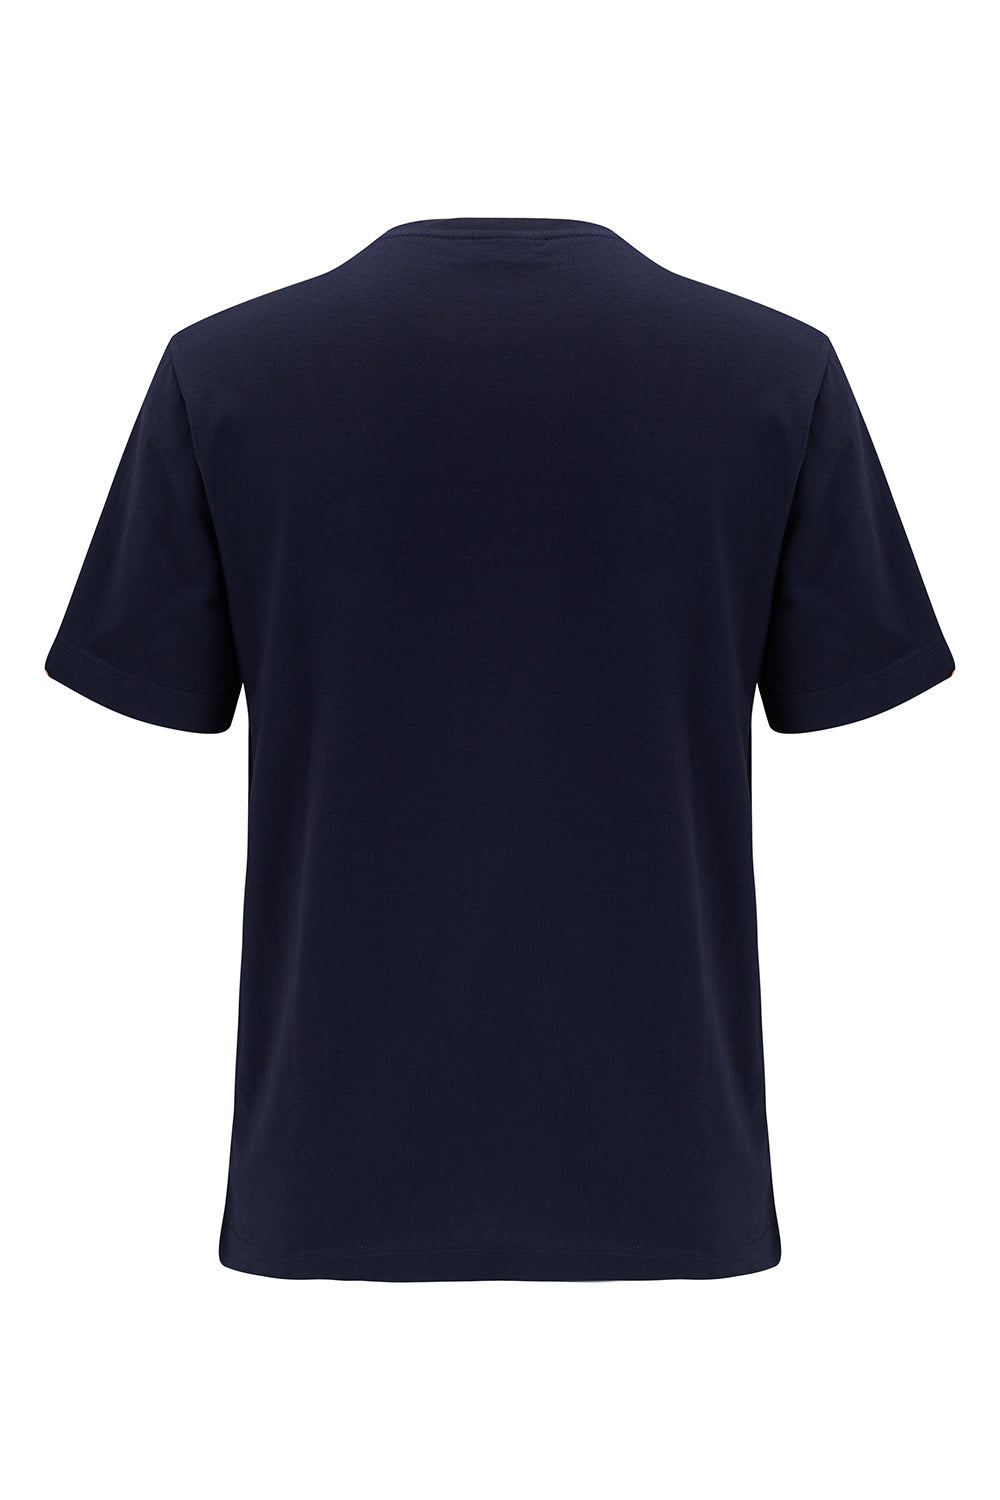 Missoni Men's Short-Sleeve Print T-shirt Navy - Back View